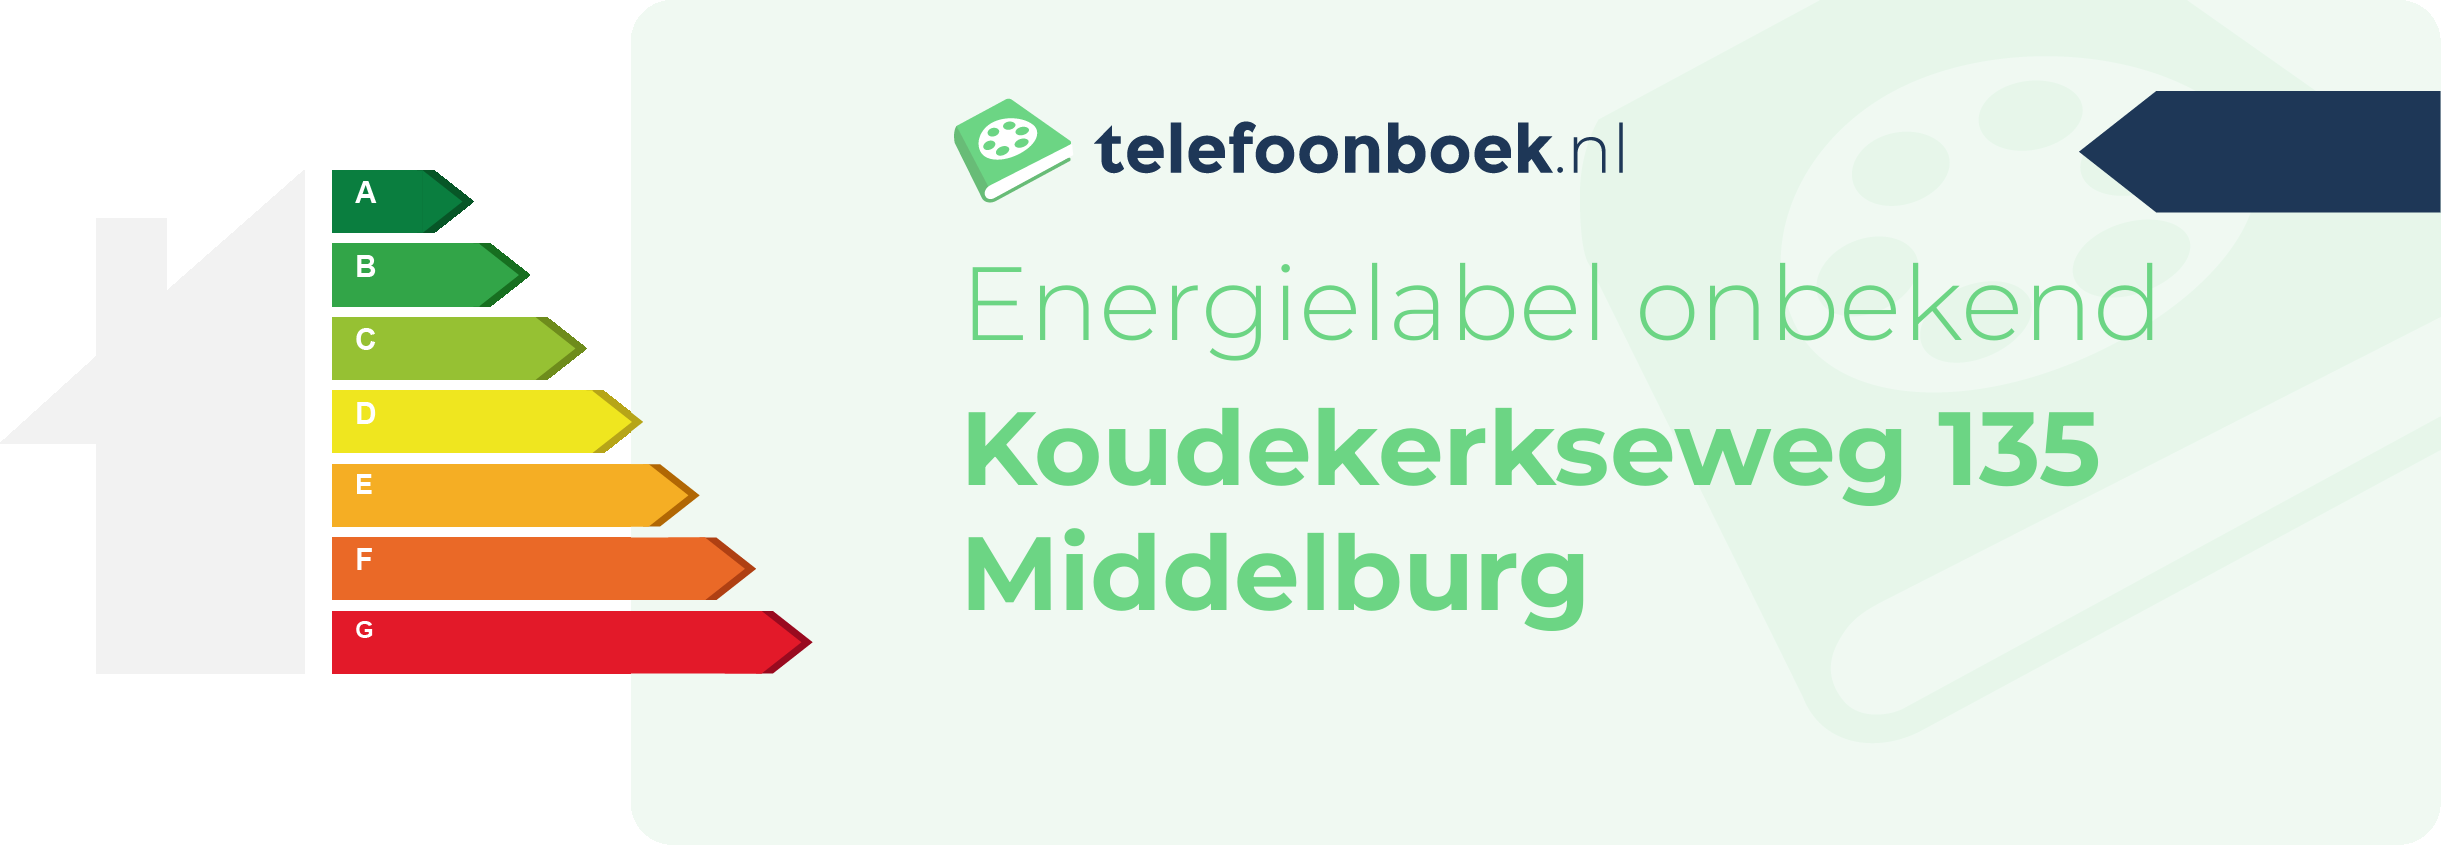 Energielabel Koudekerkseweg 135 Middelburg